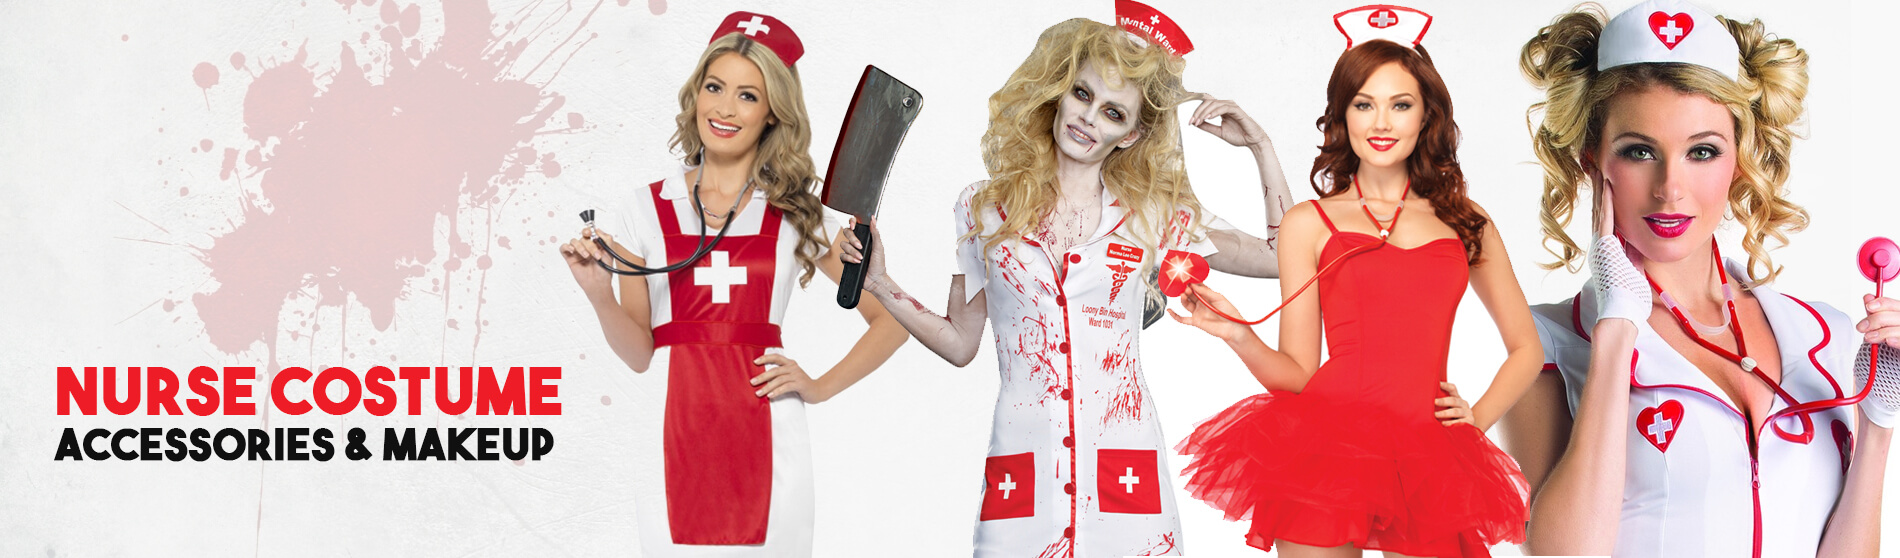 Glendale Halloween : Nurse-Costume-Accessories-Makeup